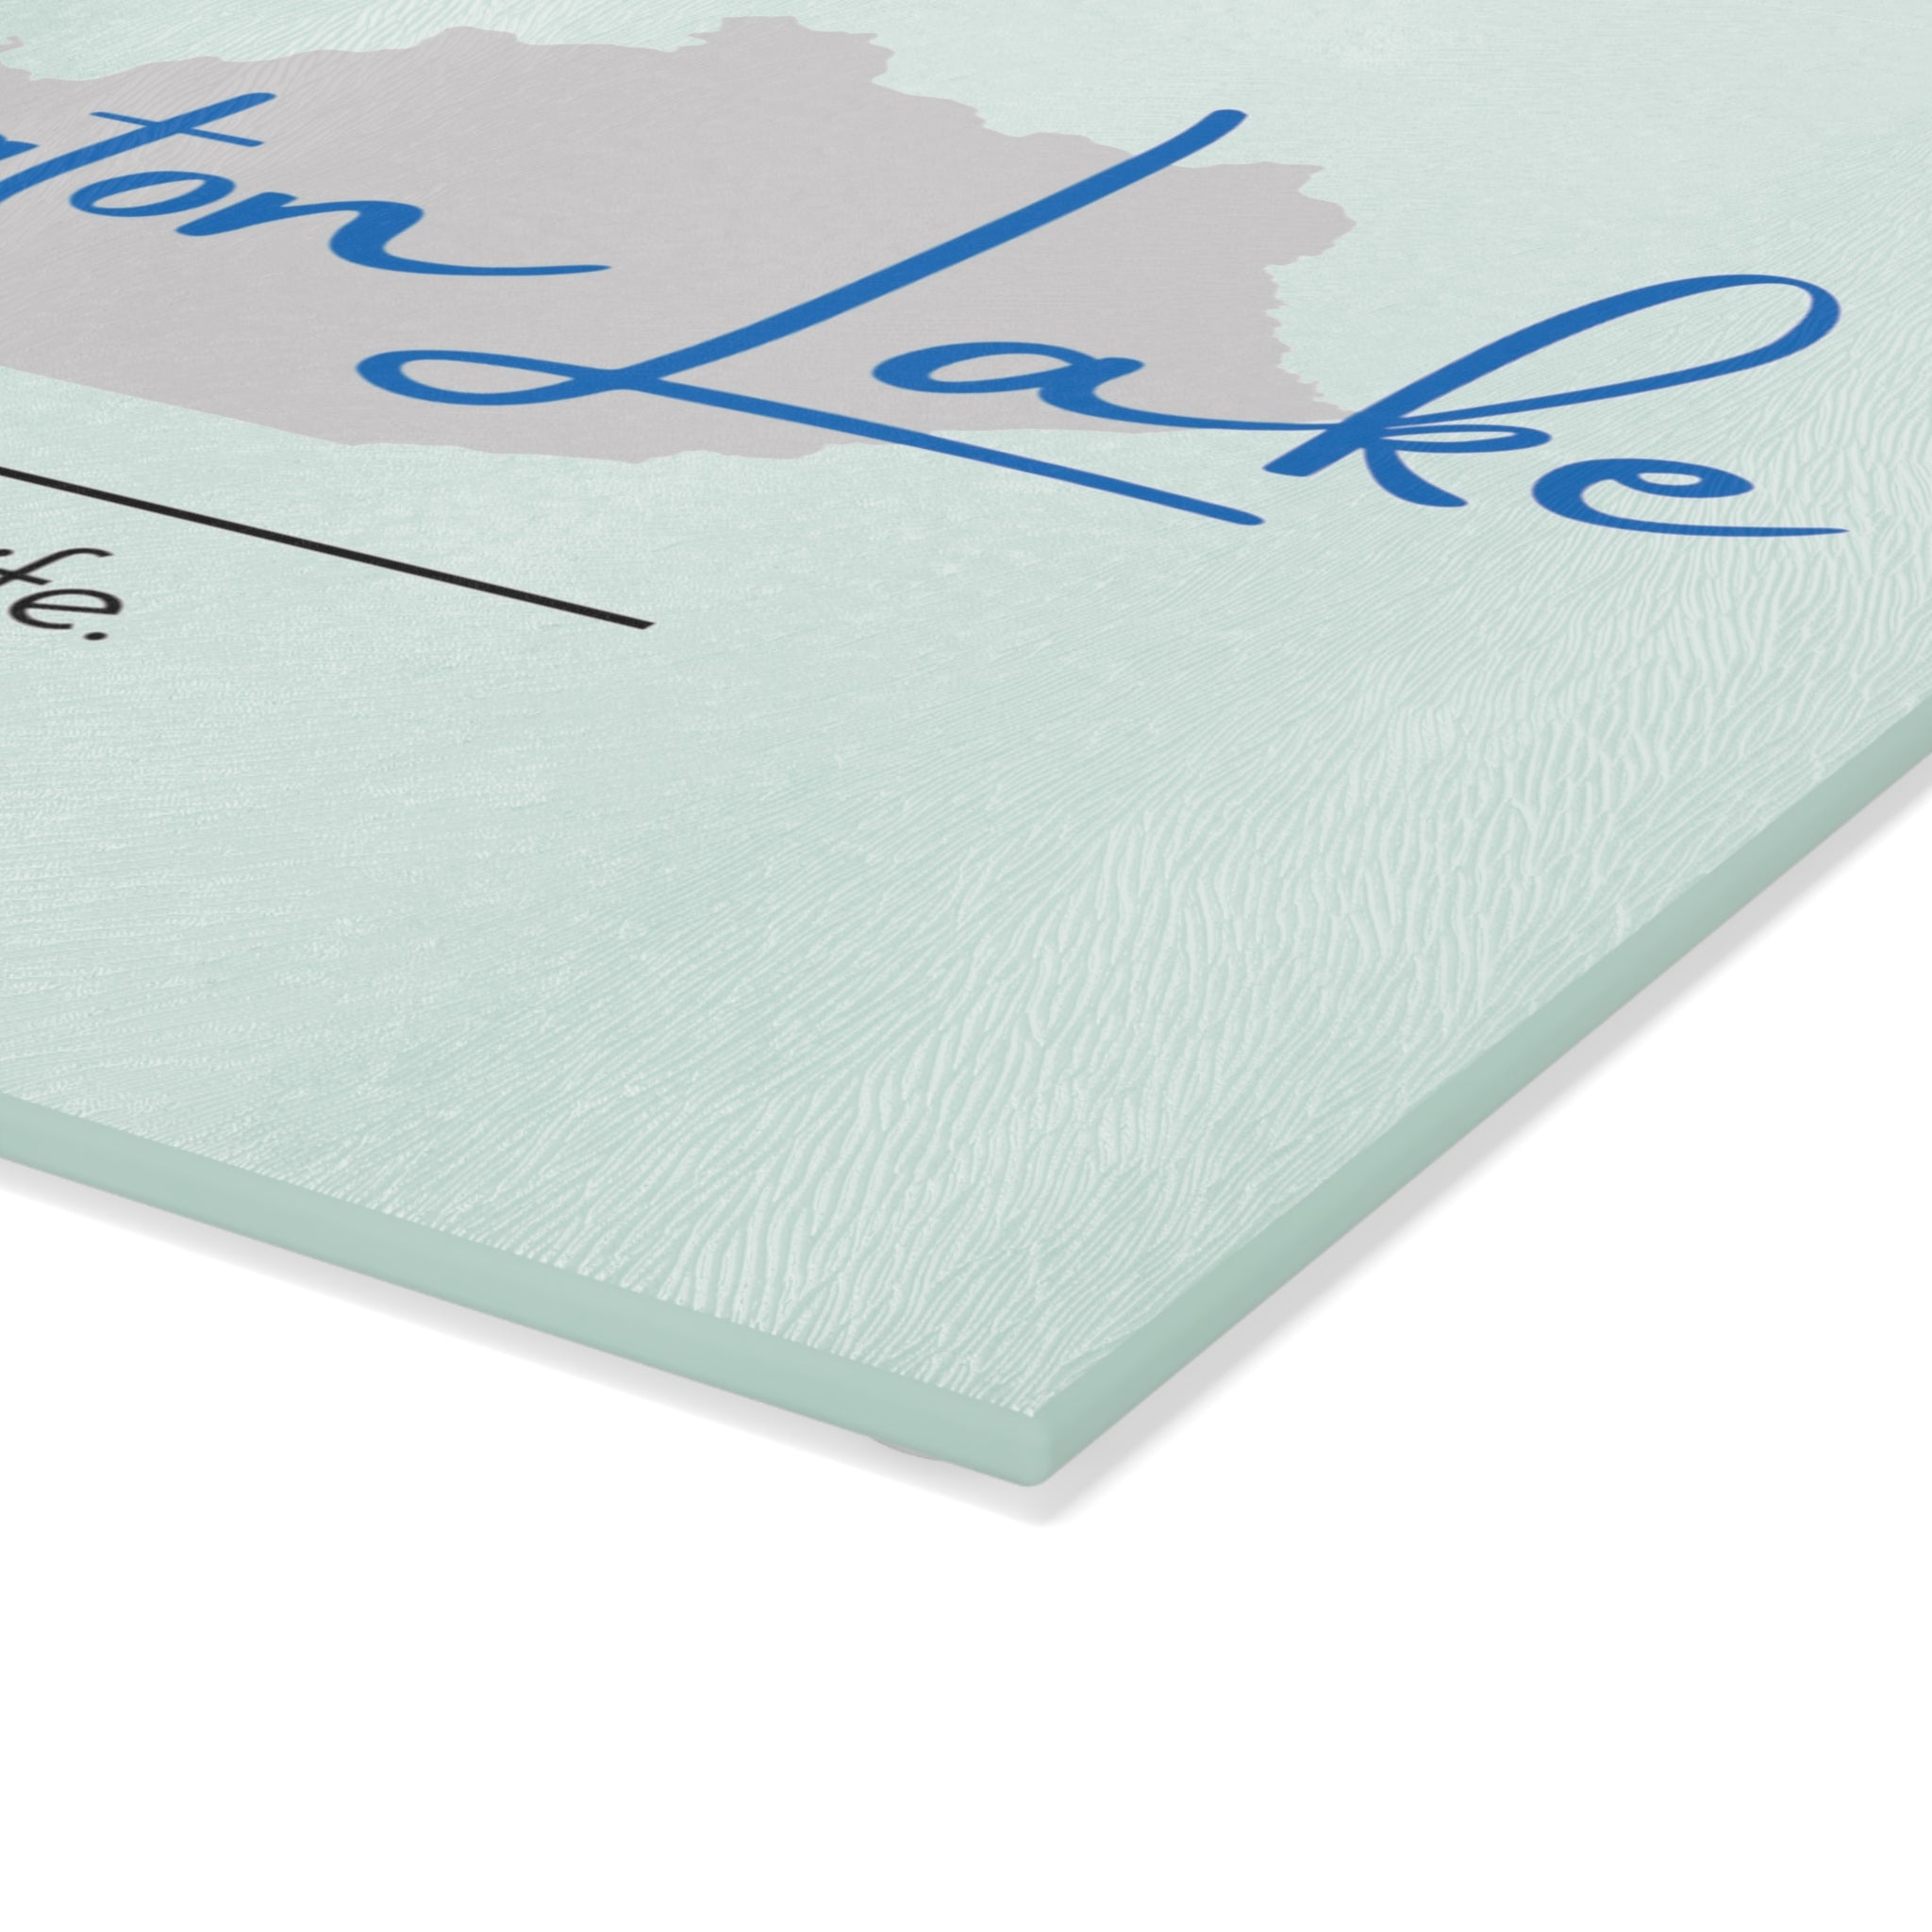 Herrington Lake Signature Collection Glass Cutting Board - White